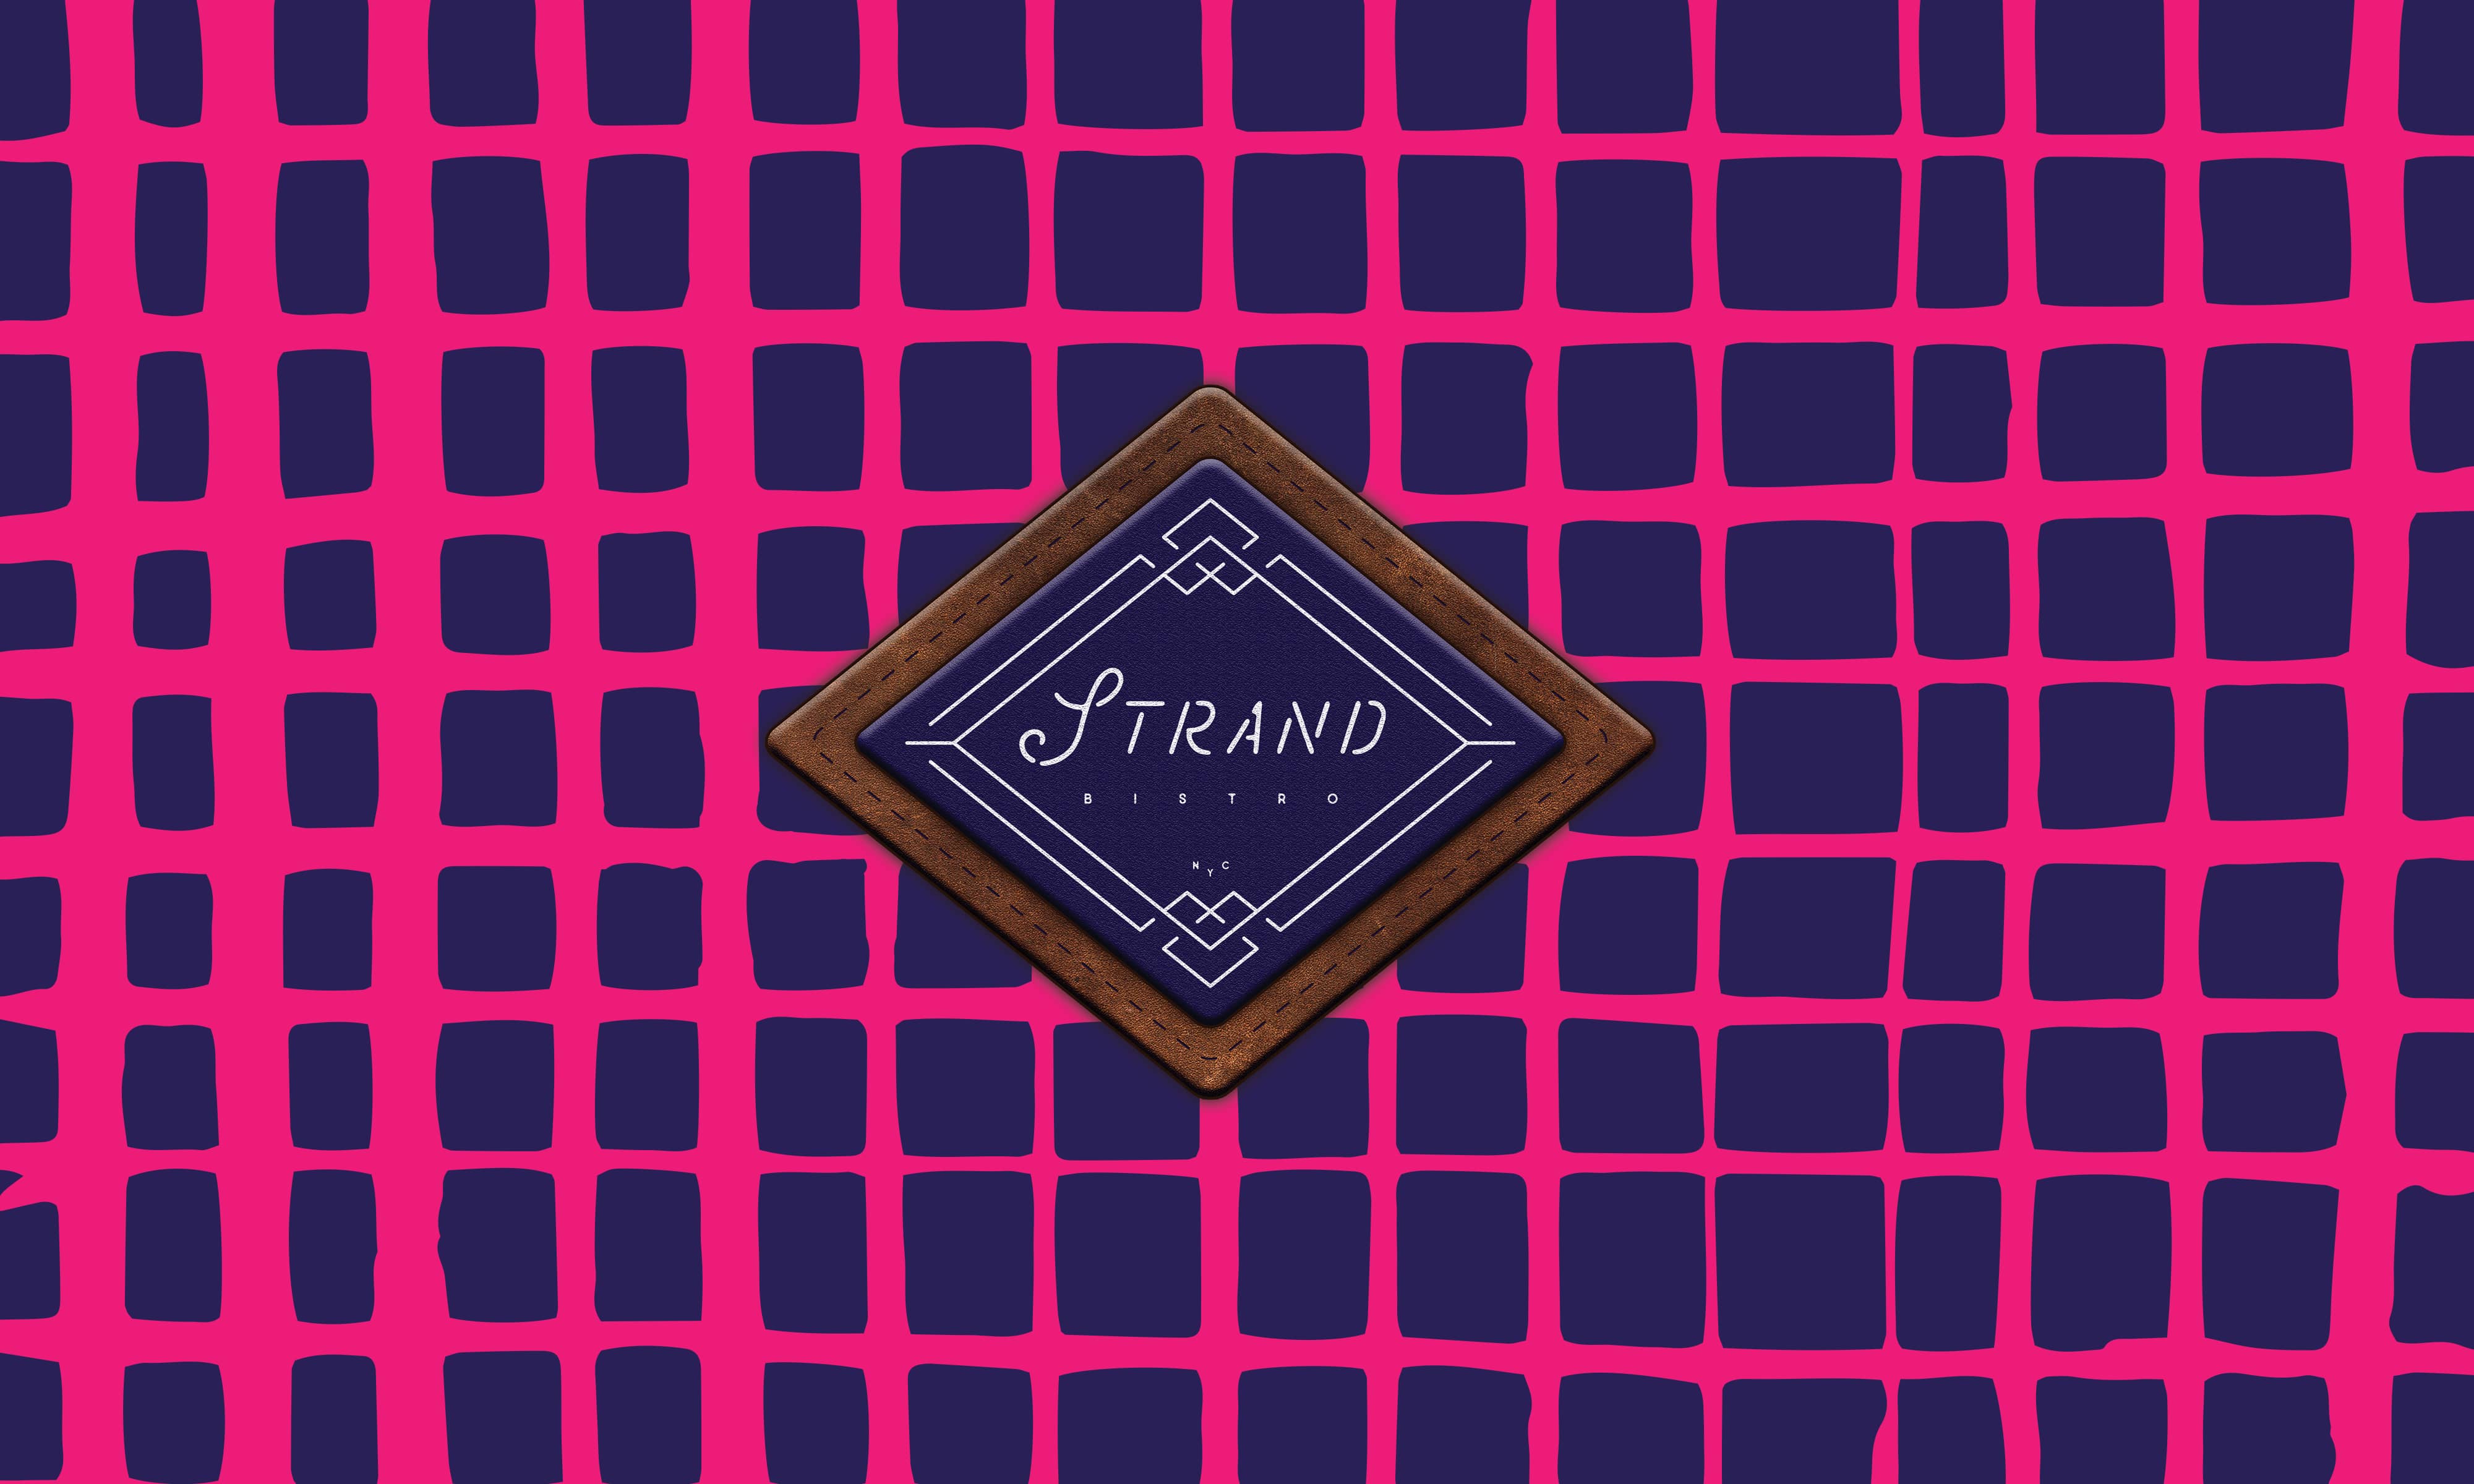 Strand Bistro NYC pattern